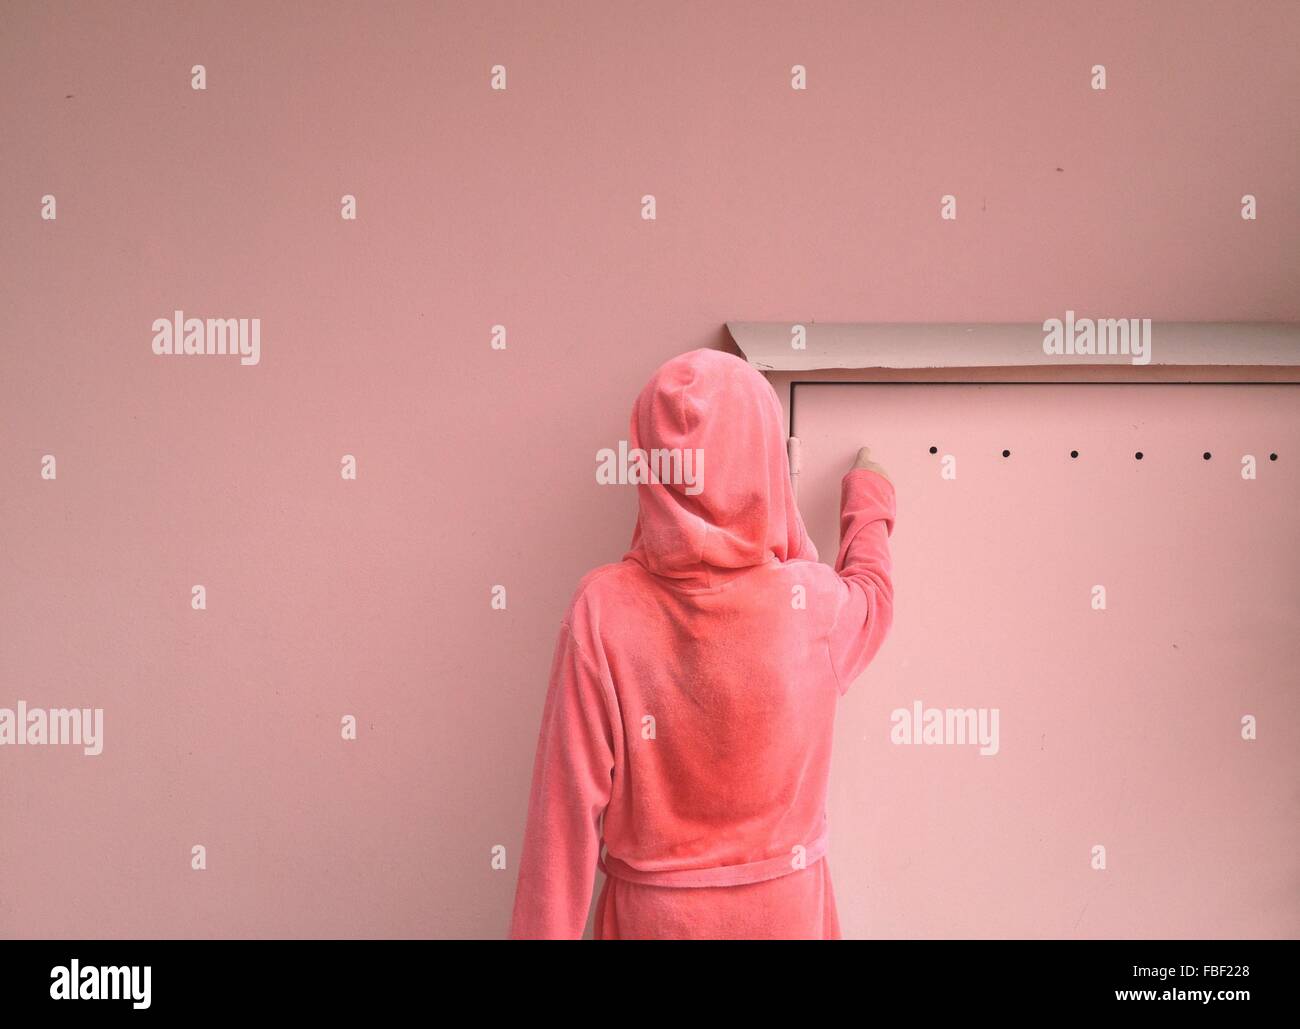 Vista trasera de una mujer en el capó contra la pared rosa Foto de stock